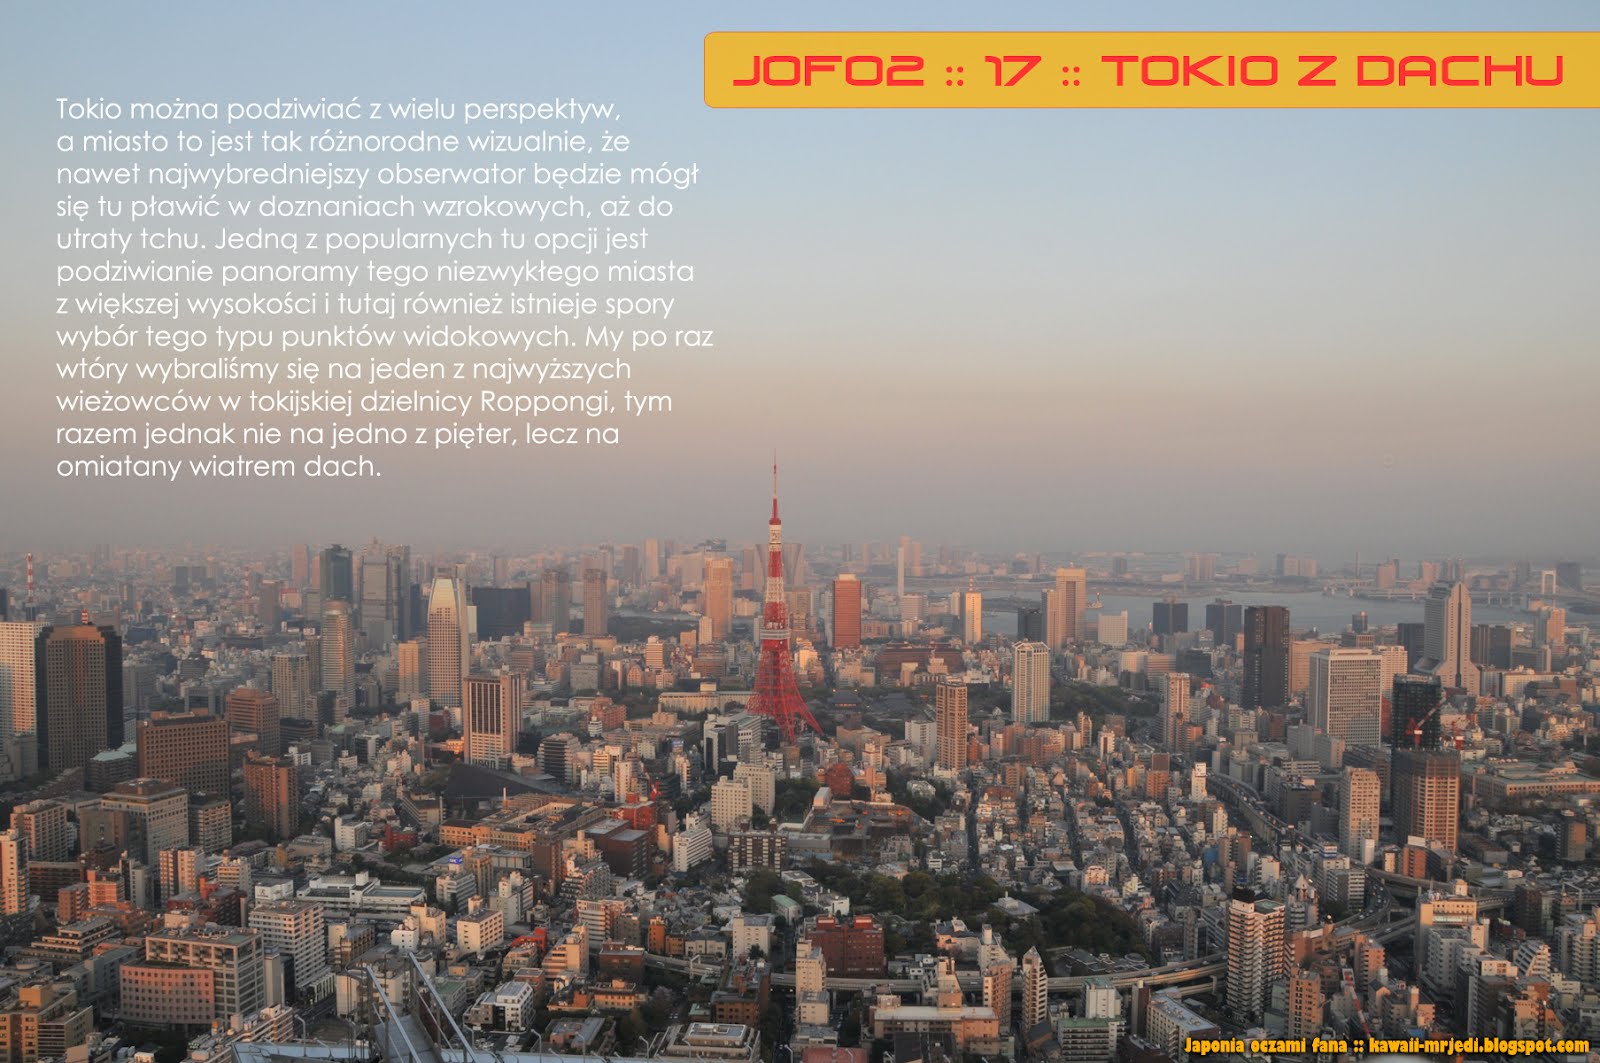 JOF01-17-Tokio-z-dachu.jpg